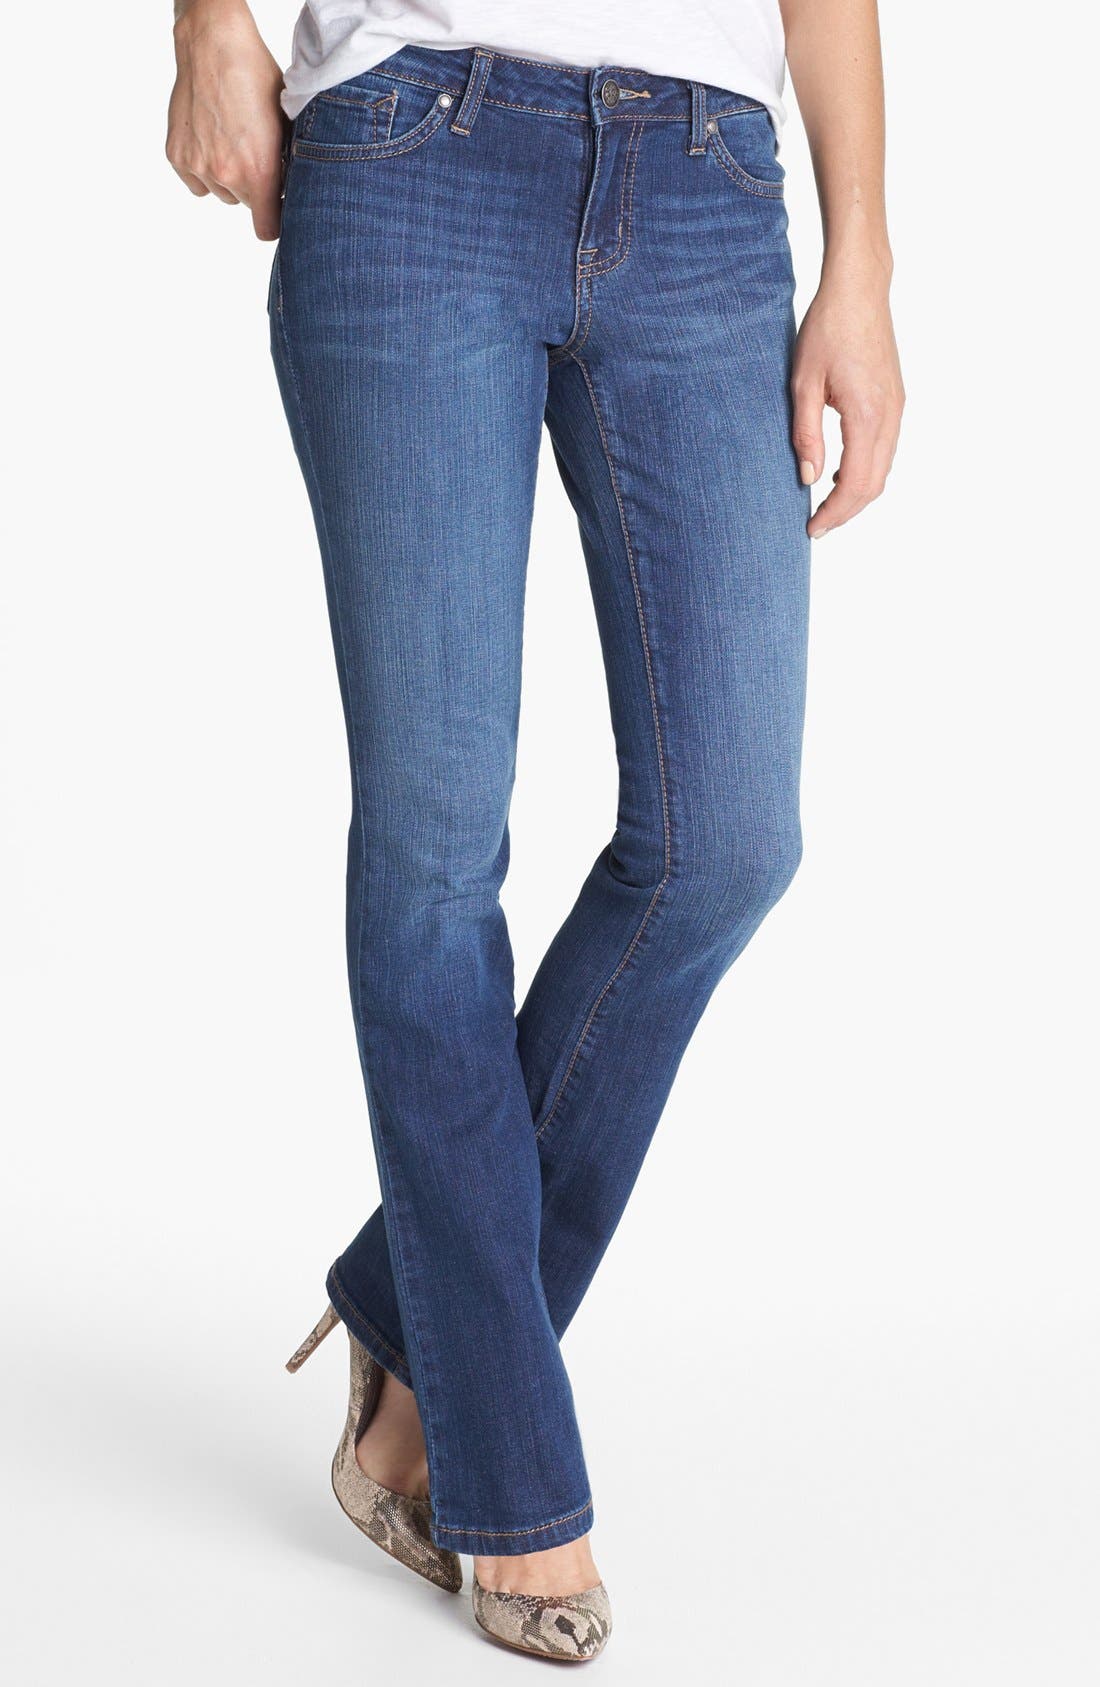 jessica simpson bootcut jeans